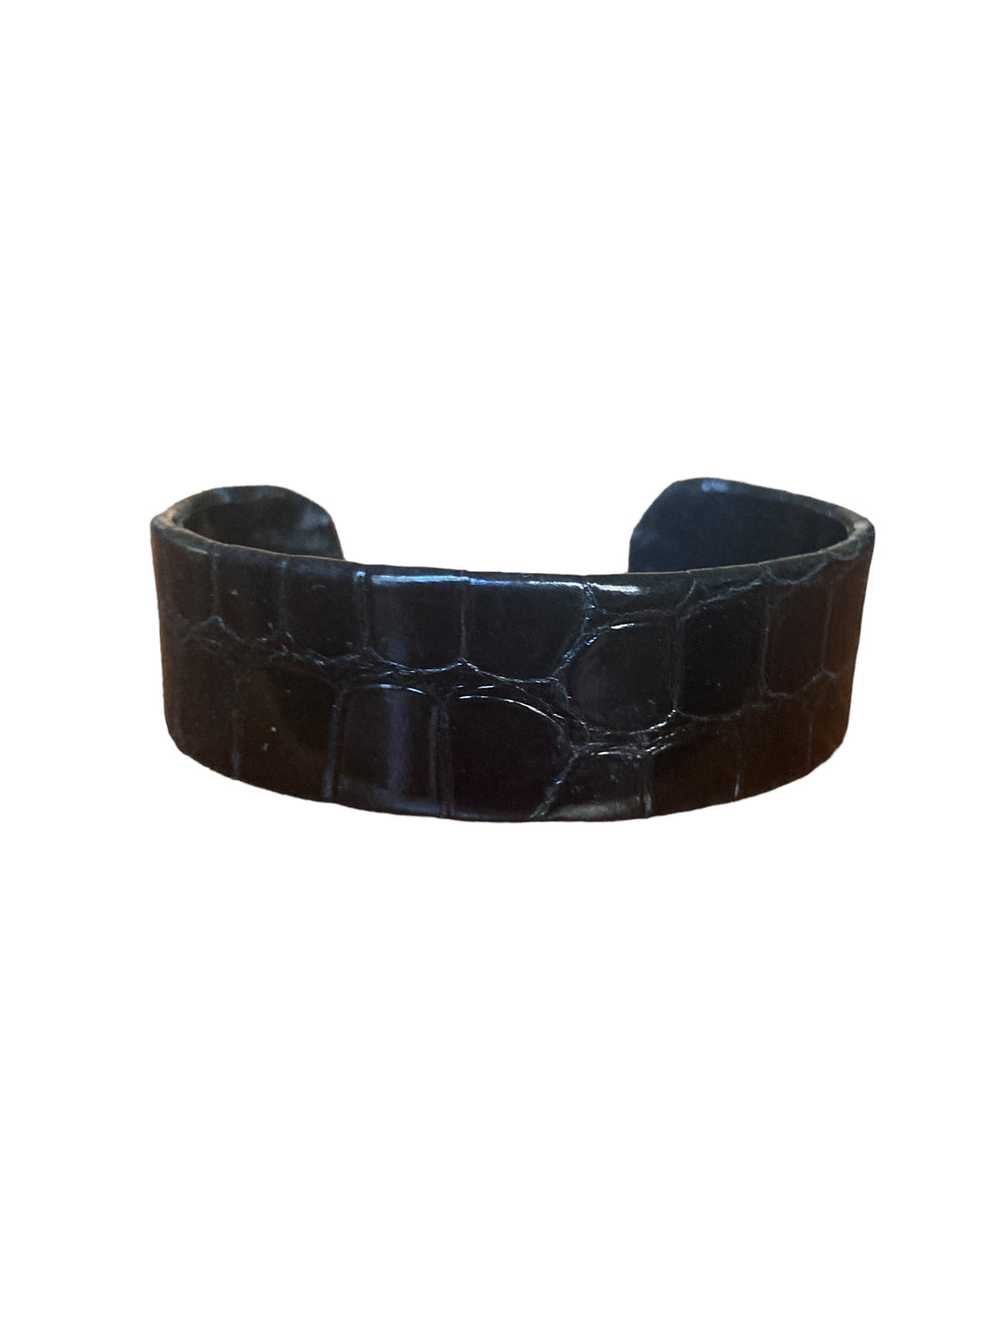 Plato Alligator Glazed Black Bracelet Cuff - image 1